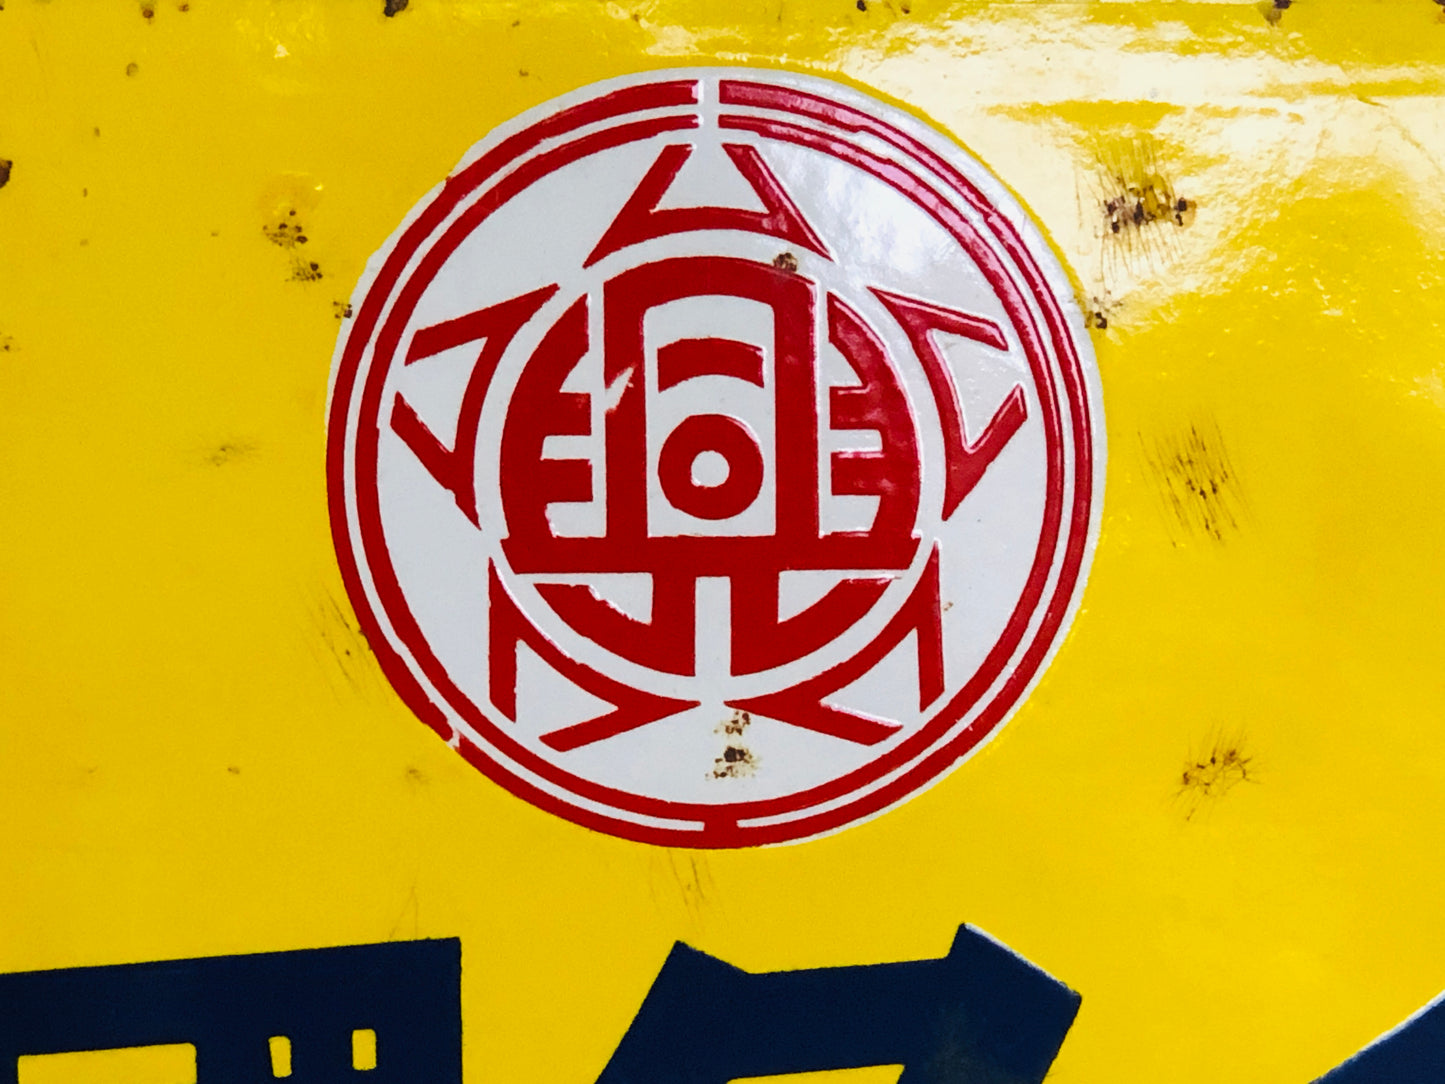 Y5201 SIGNBOARD Enamel sign Kokoku Tire yellow Japan antique decor interior